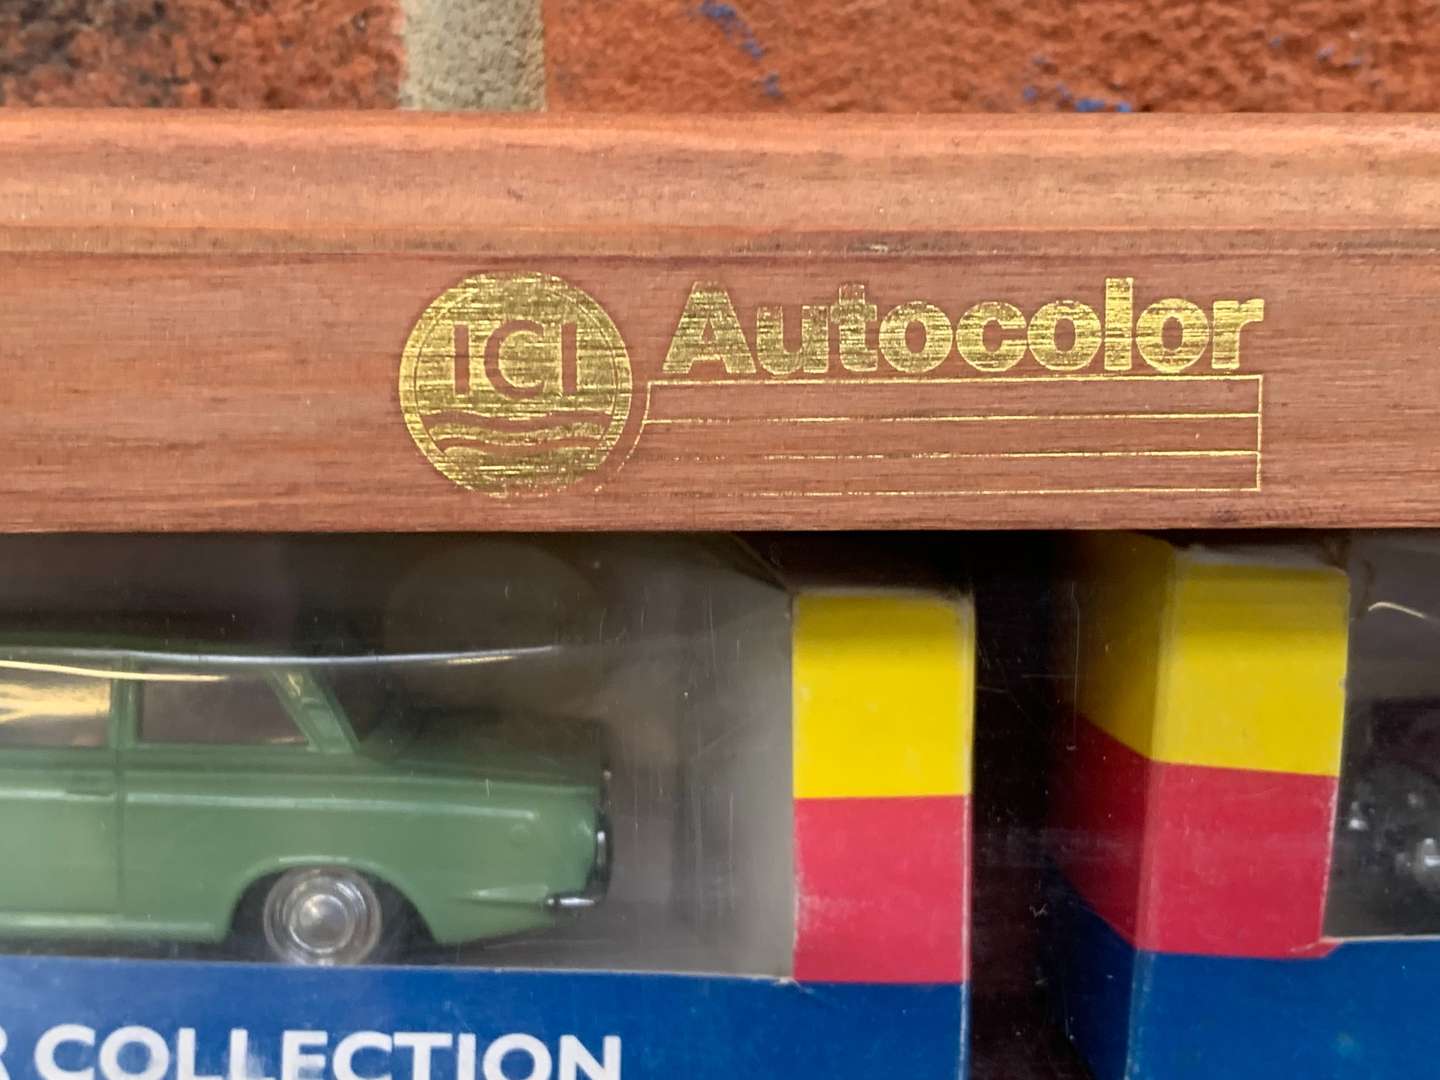 <p>Cased ICI Autocolour Classic Die Cast Cars</p>